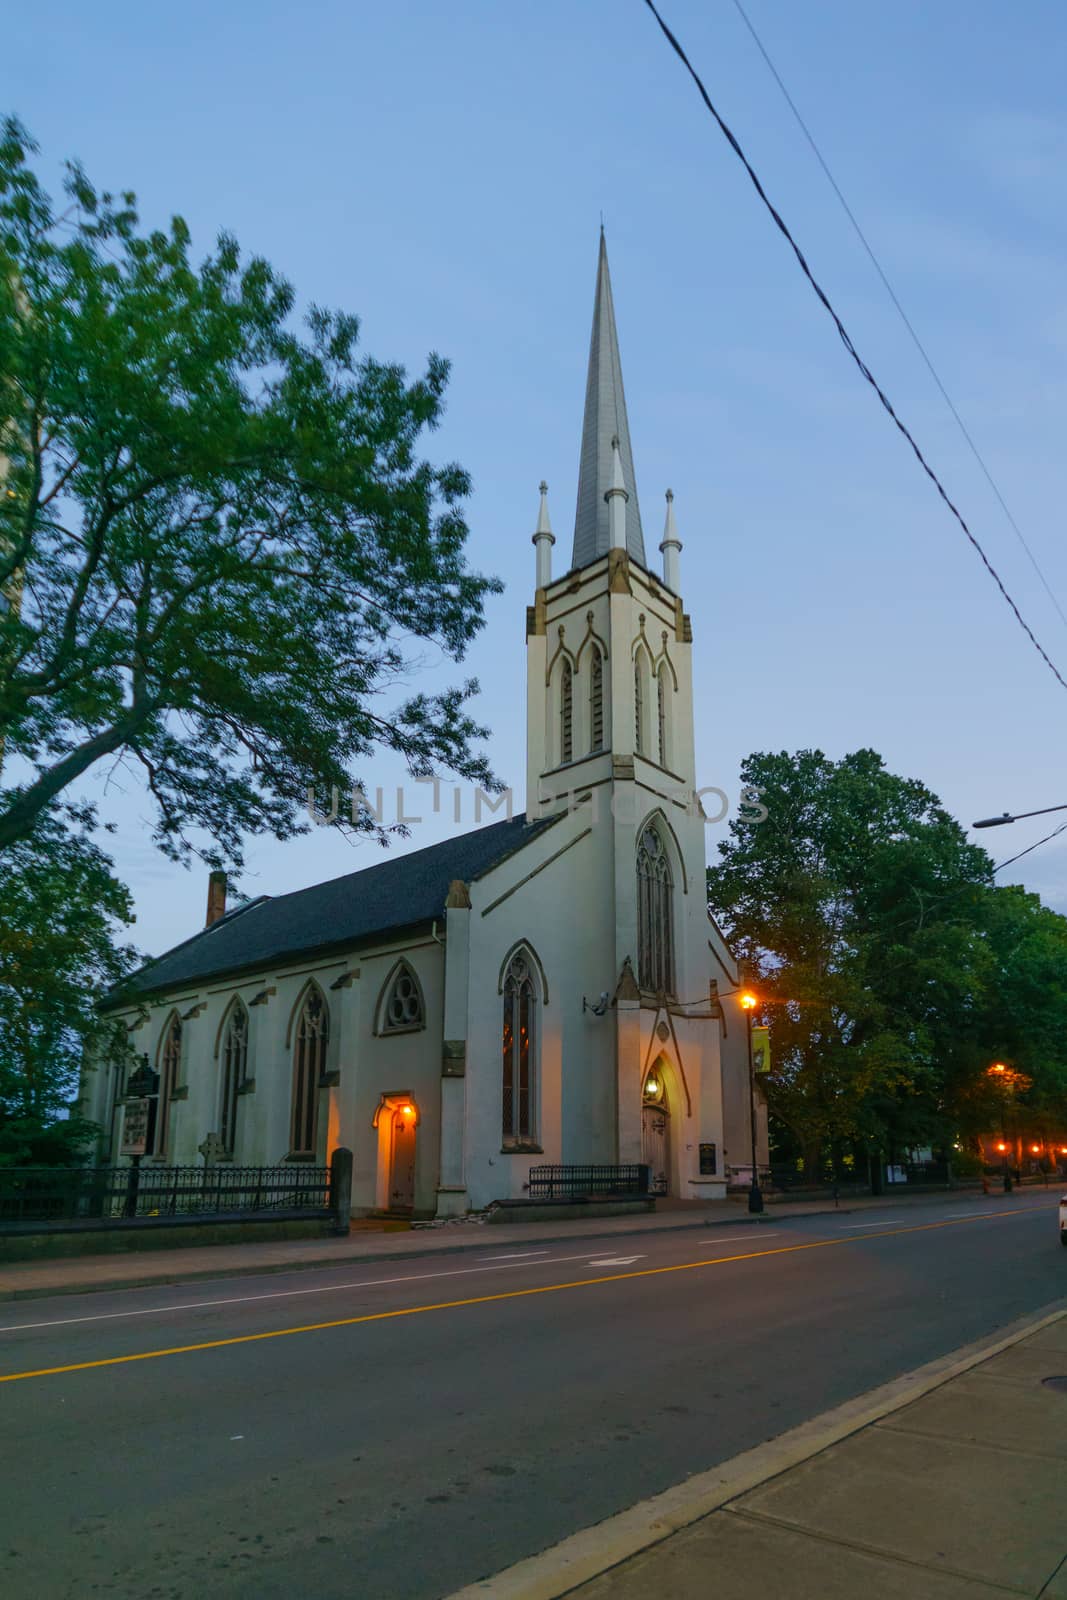 View of the St Matthews United Church, in Halifax, Nova Scotia, Canada